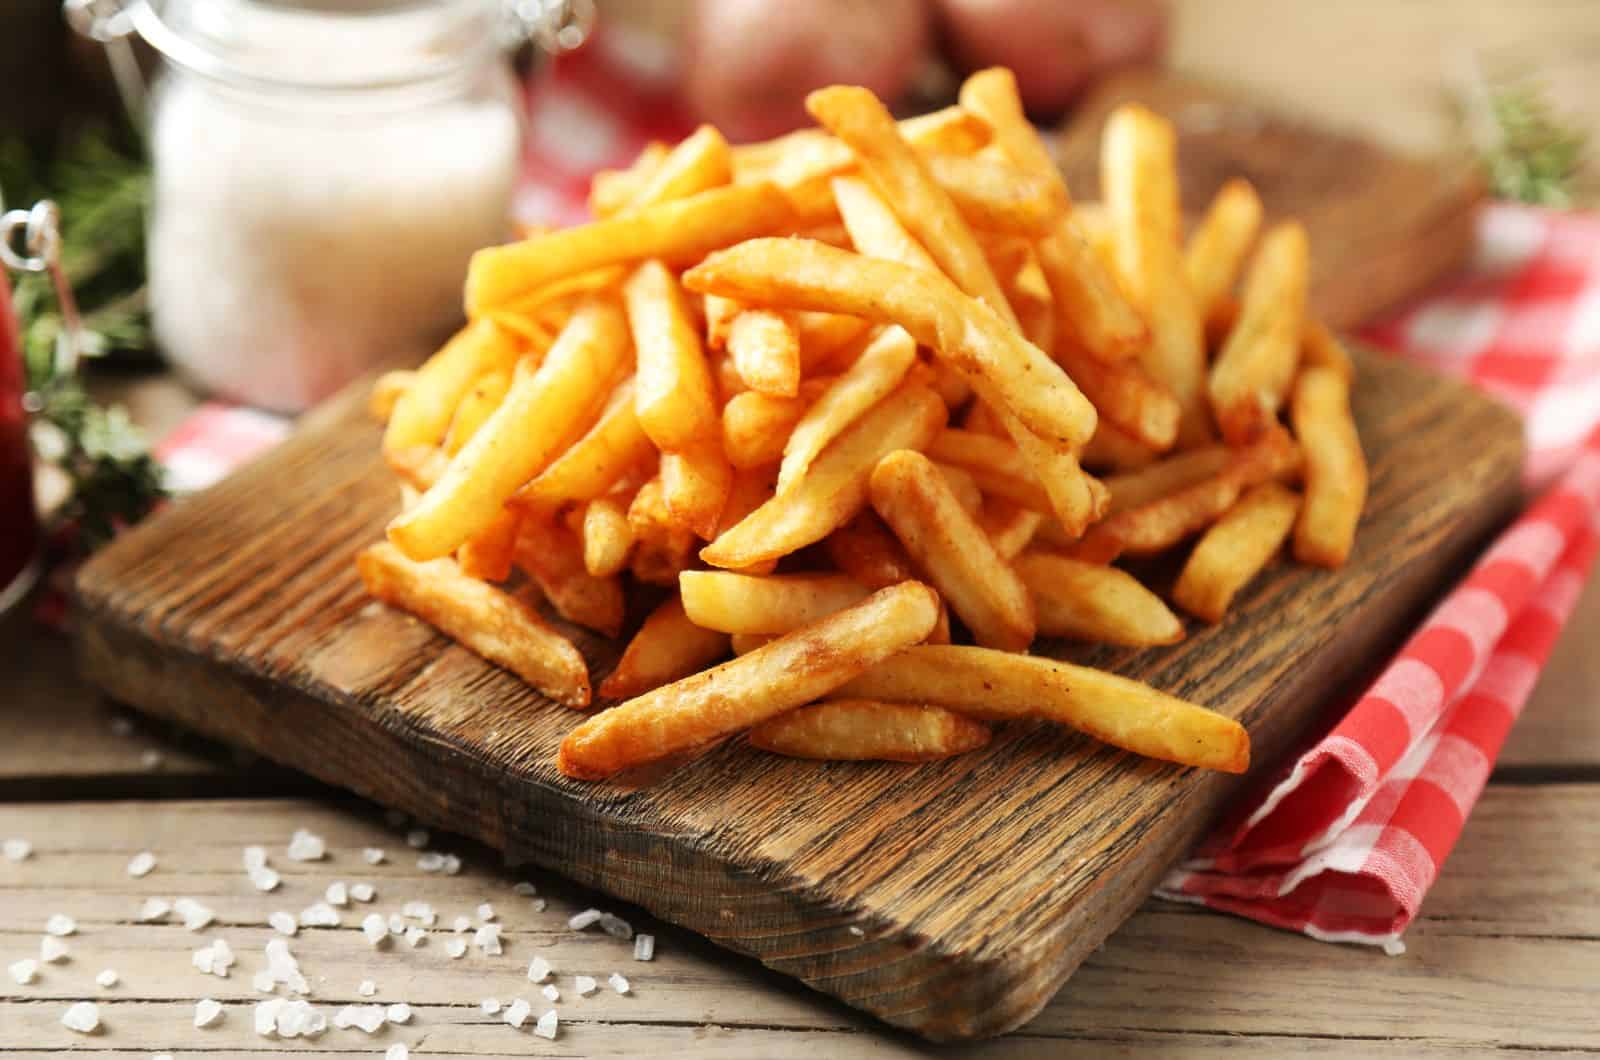 fries on cutting board